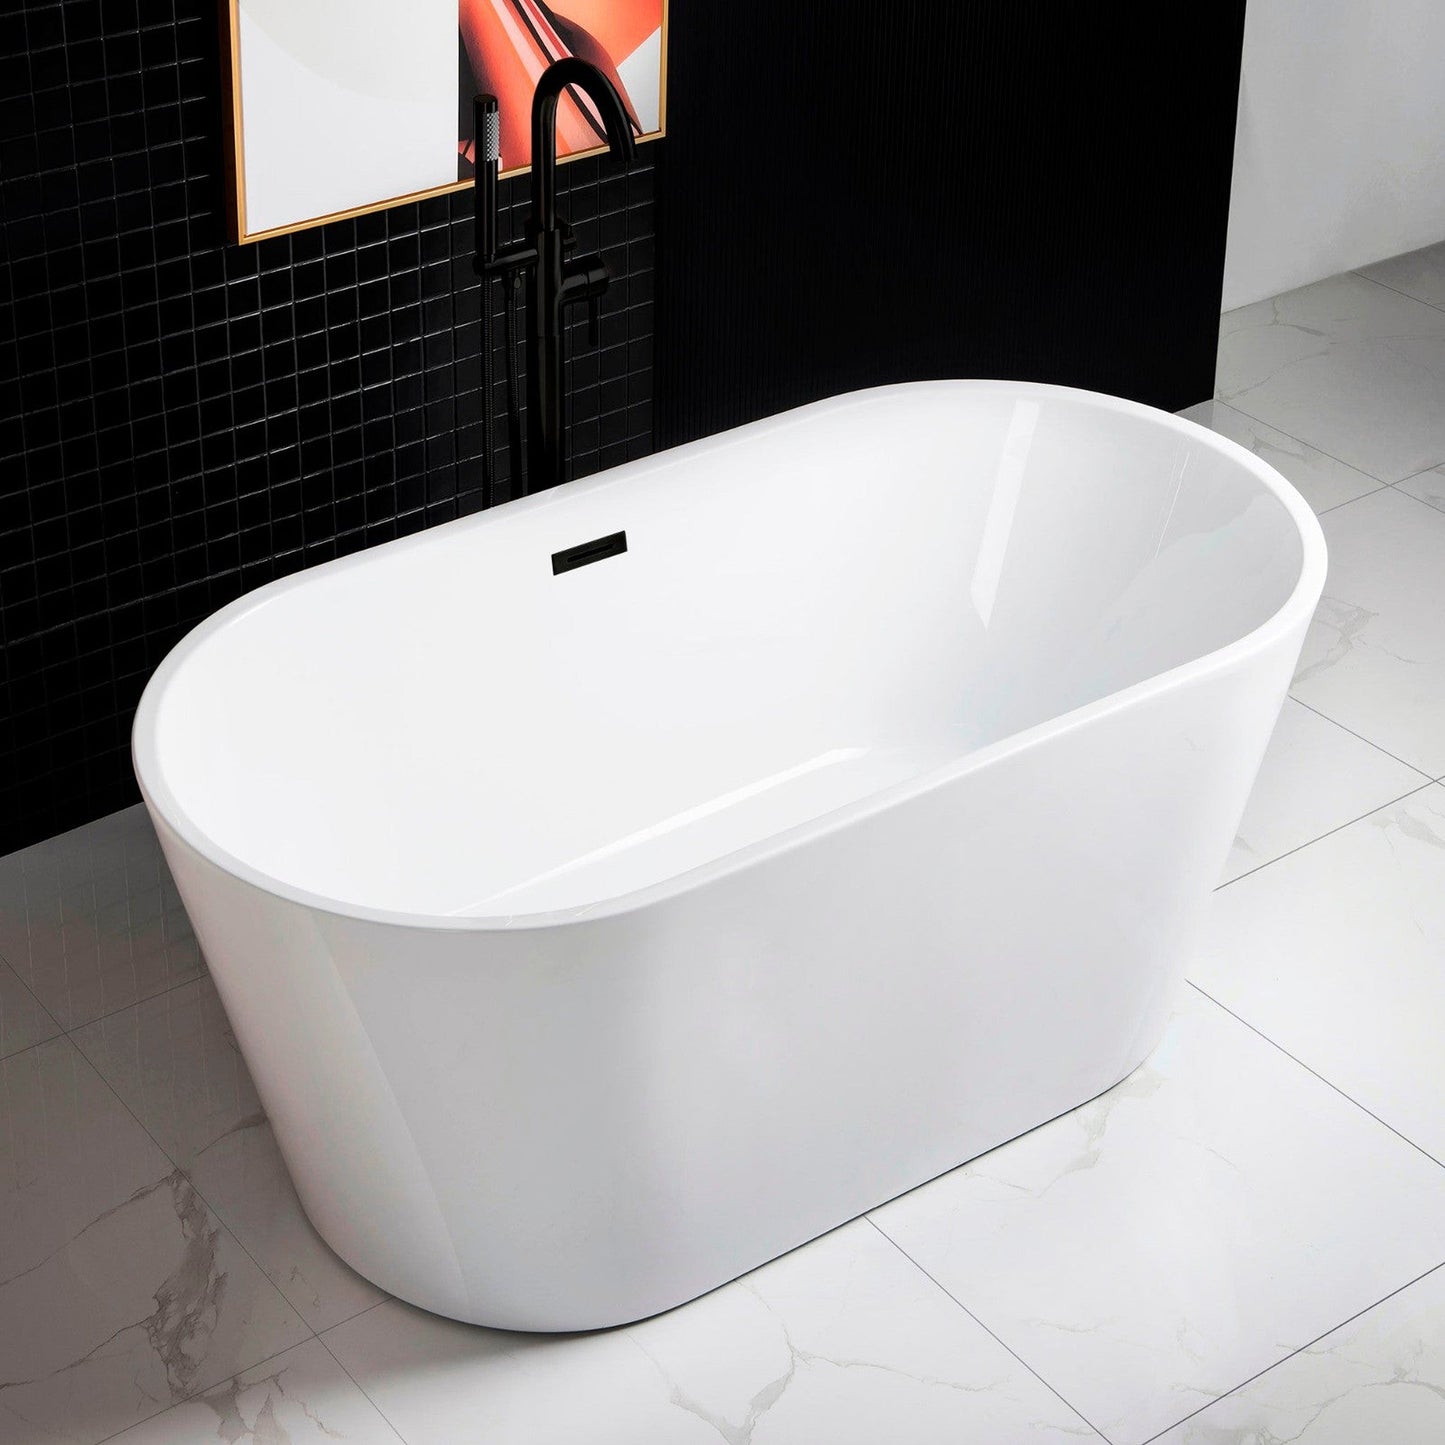 WoodBridge B0014 59" White Acrylic Freestanding Soaking Bathtub With Matte Black Drain, Overflow, F0072MBDR Tub Filler and Caddy Tray